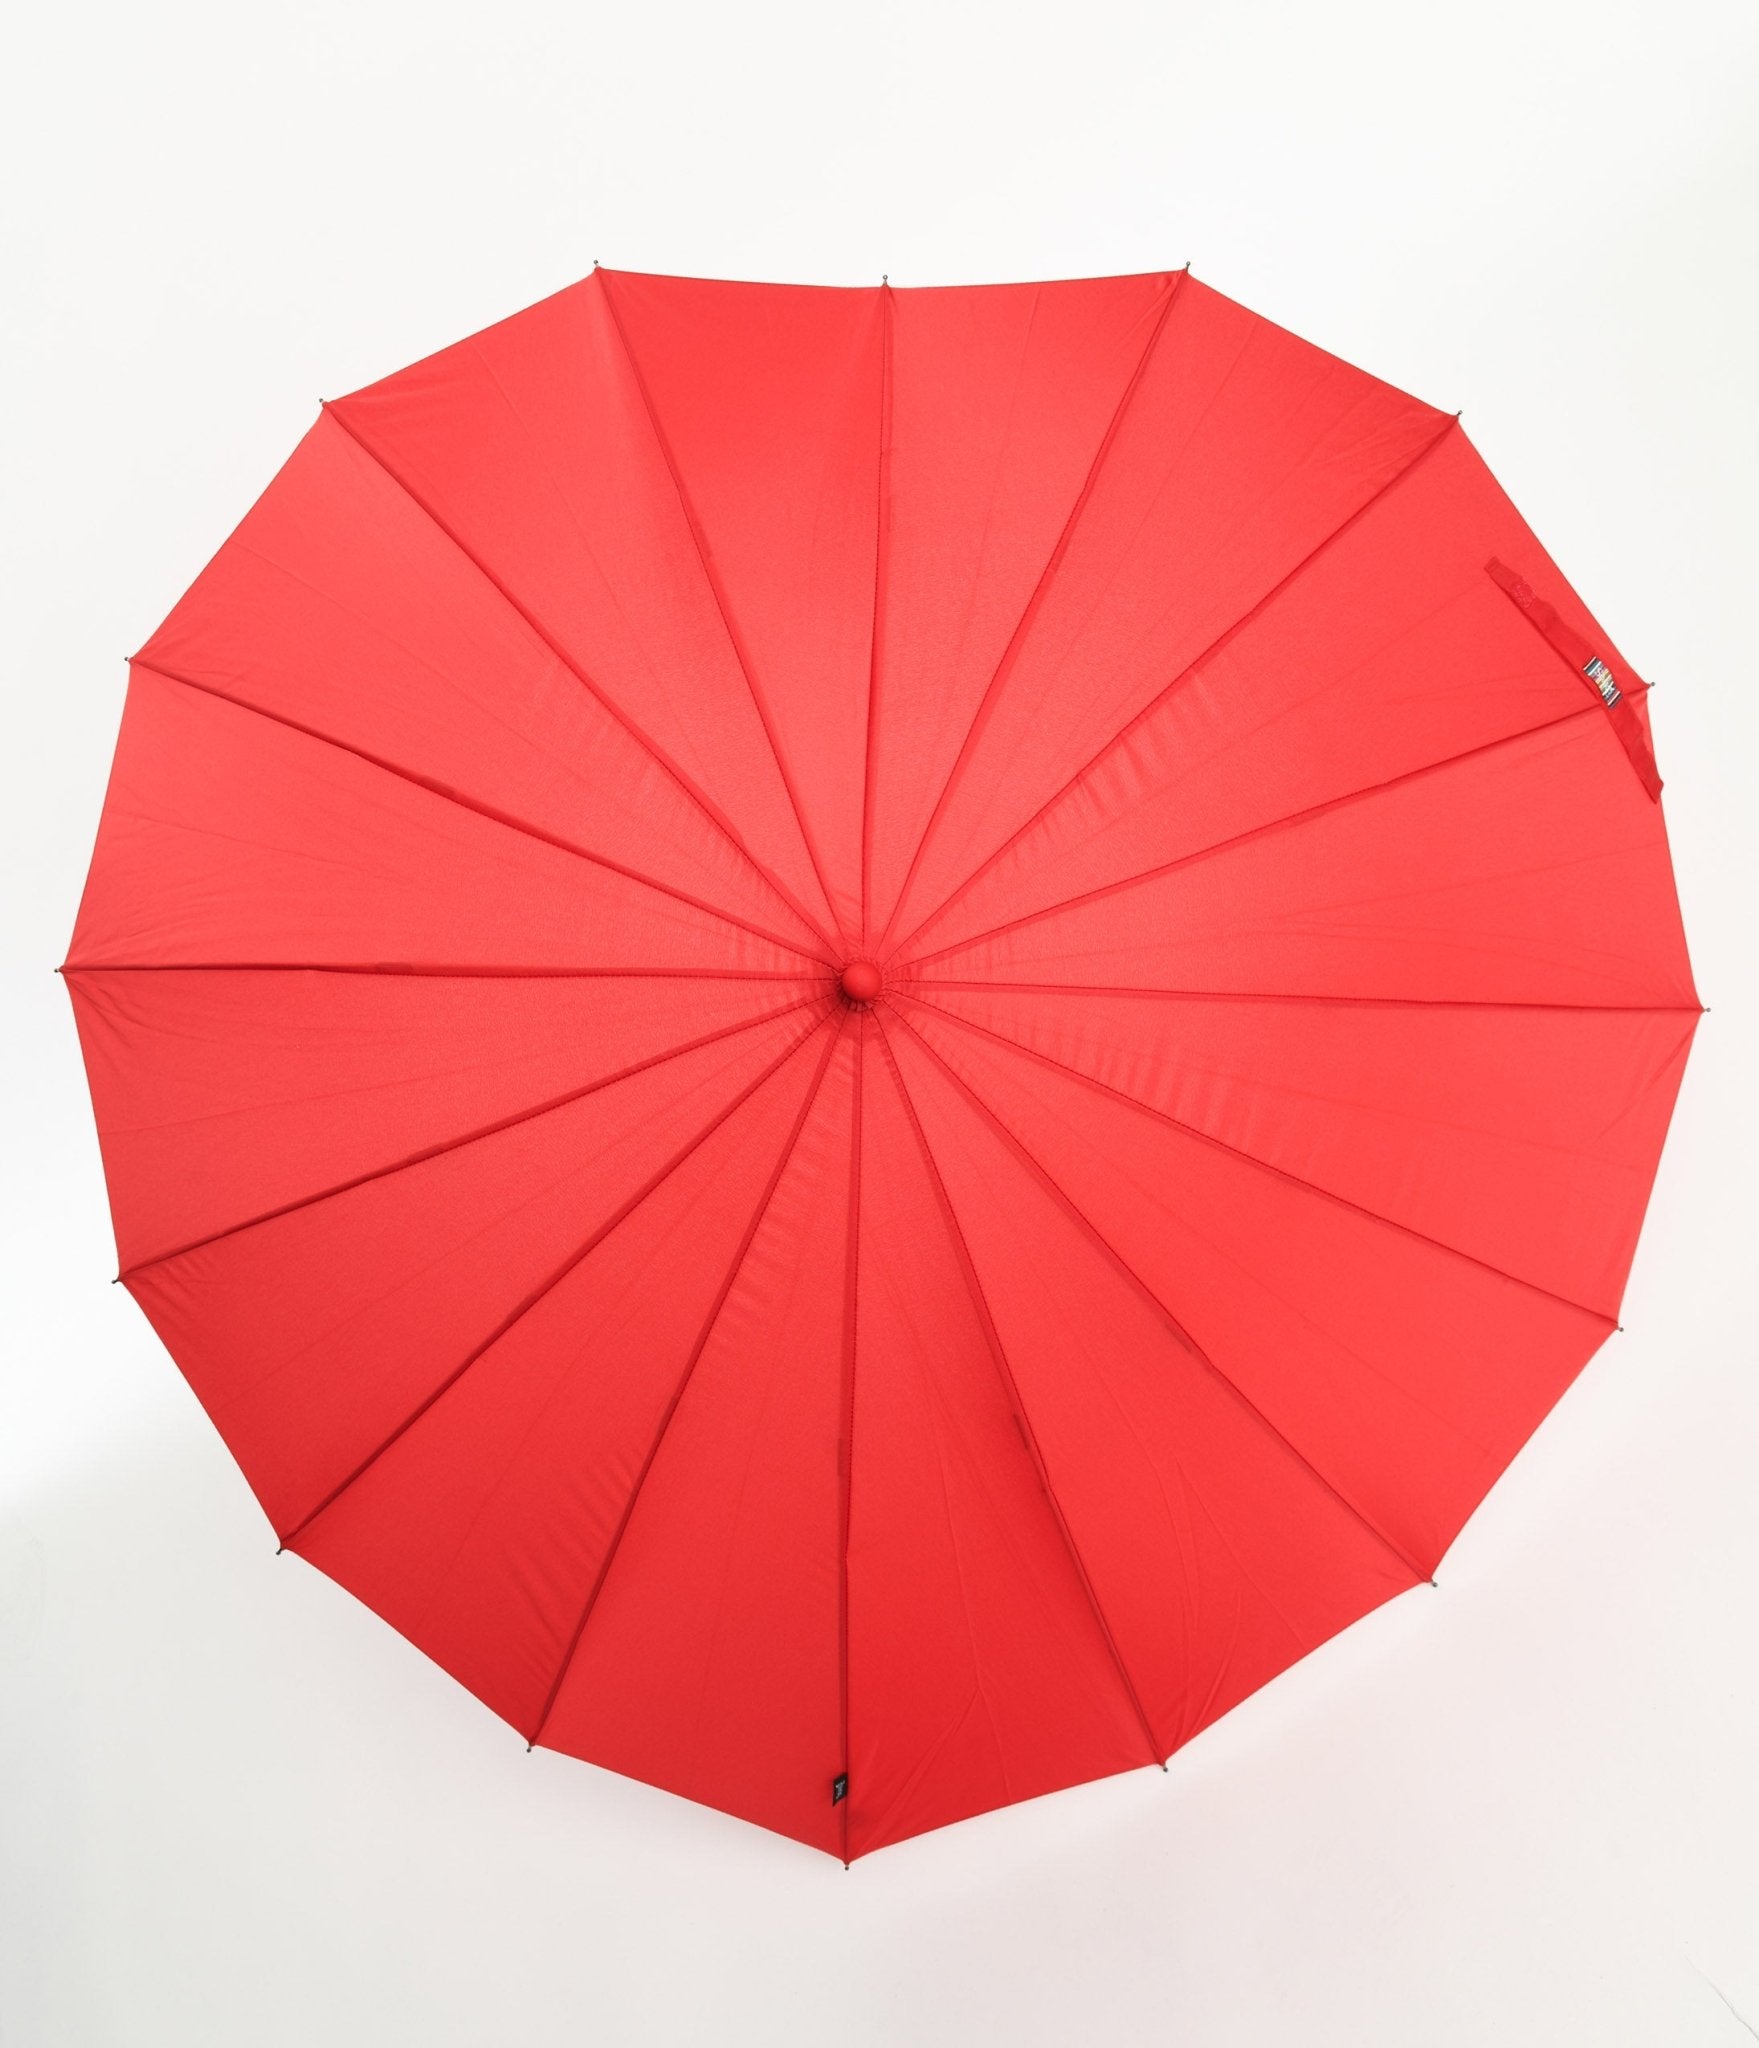 https://cdn.shopify.com/s/files/1/2714/9310/products/red-heart-shaped-umbrella-886062.jpg?v=1703097090